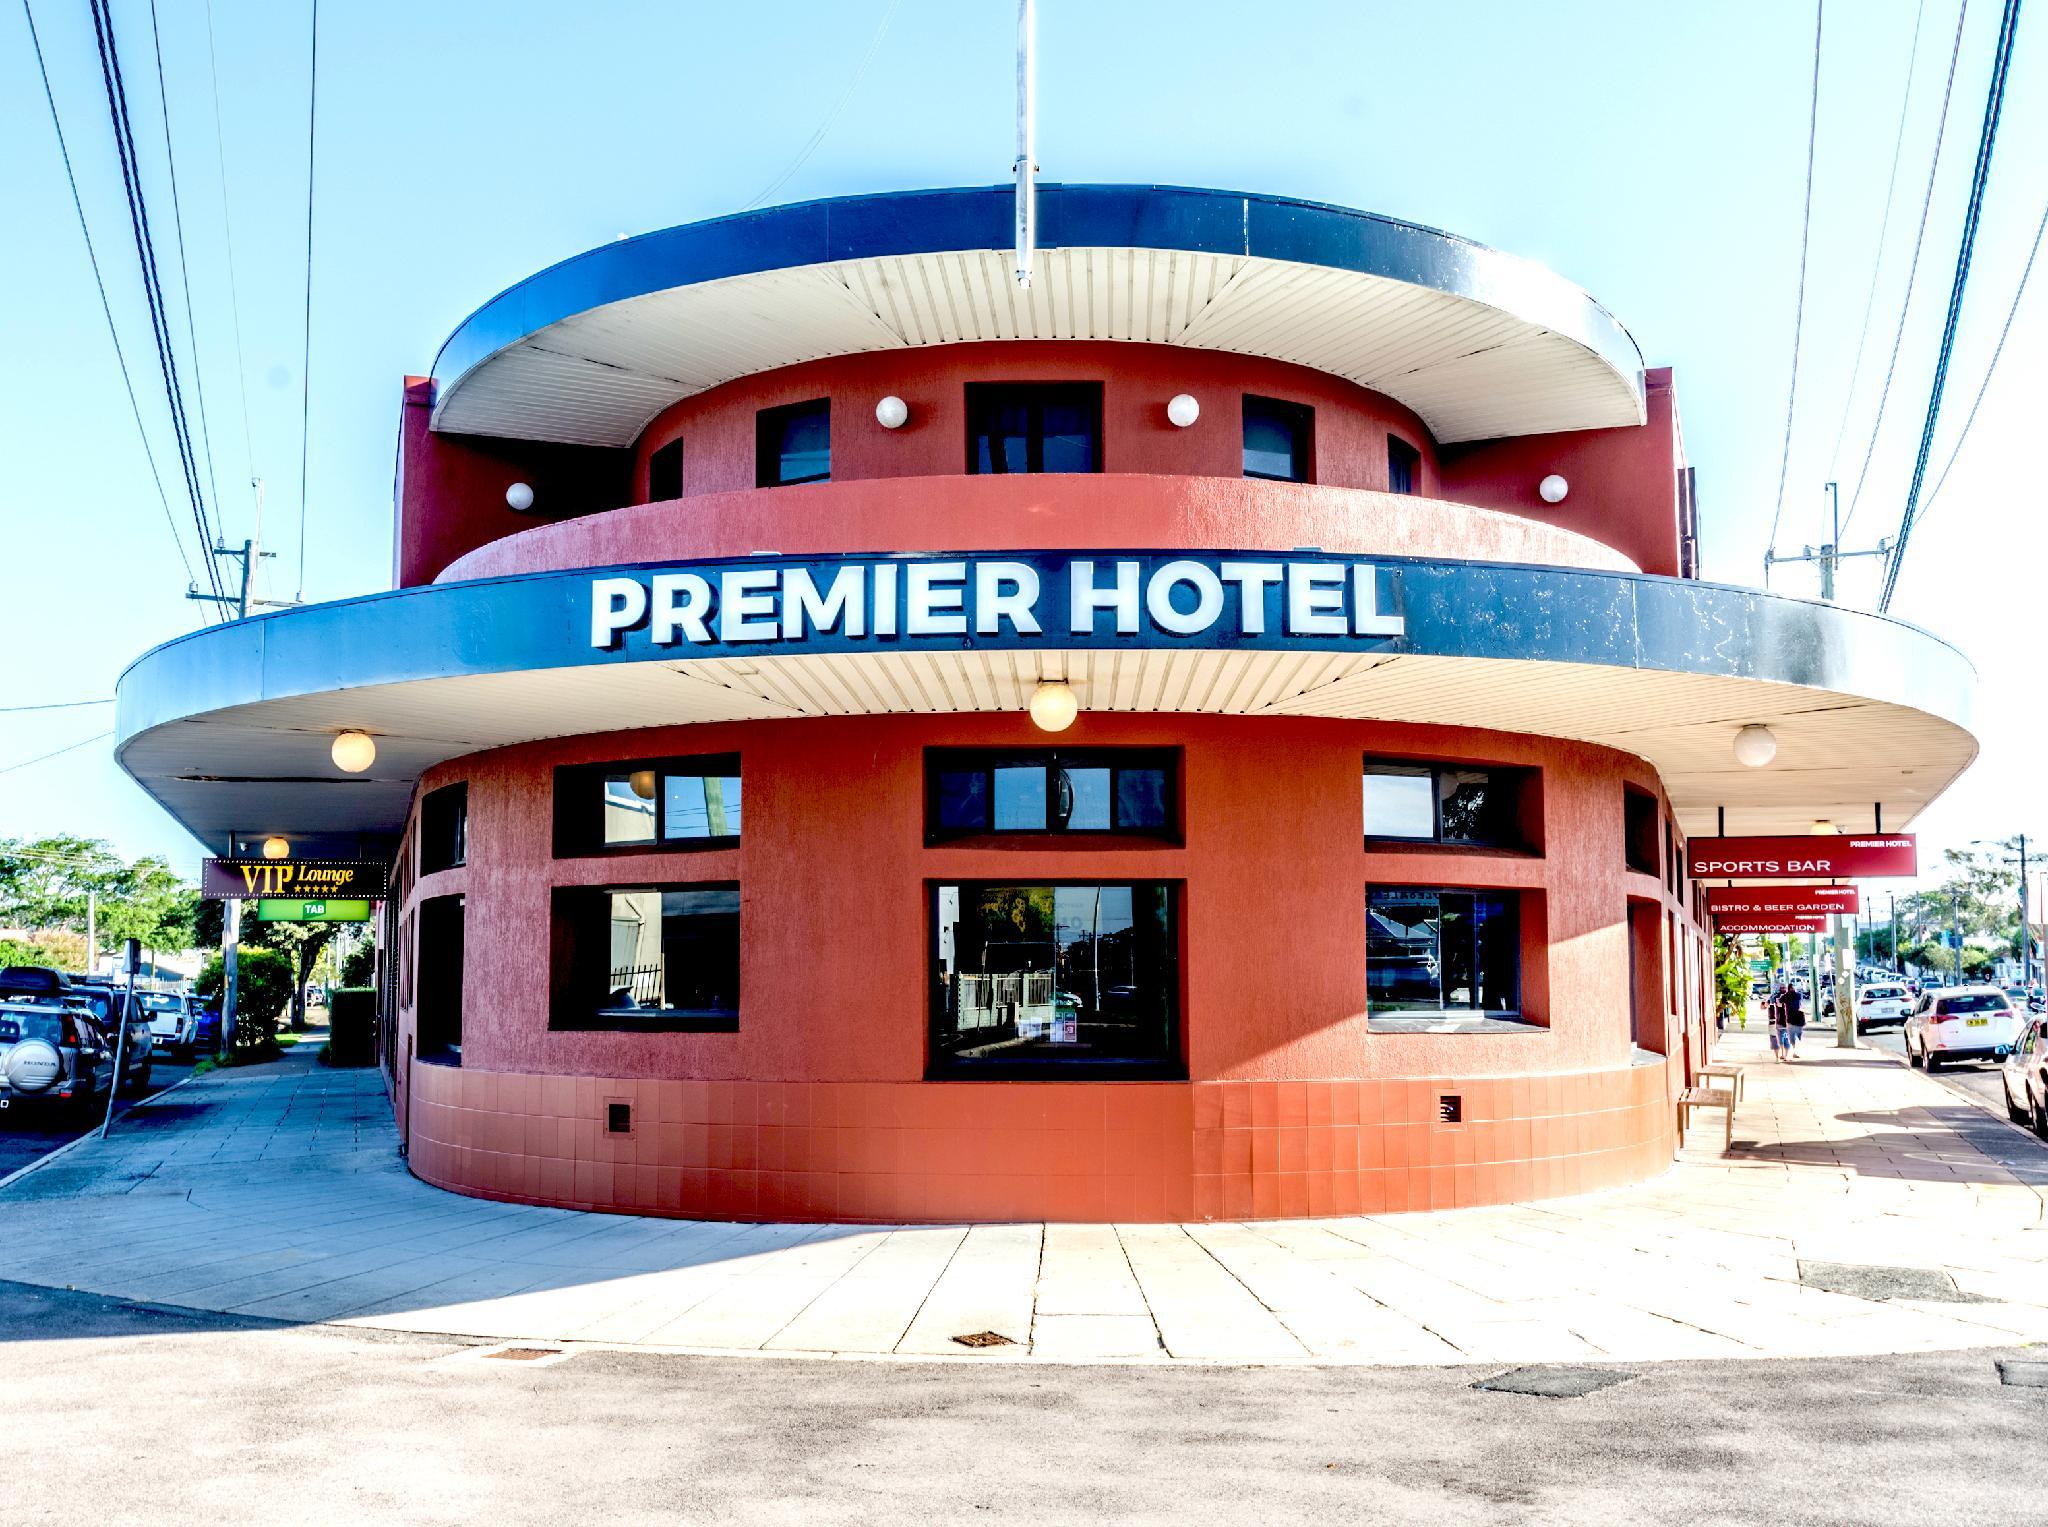 The Premier Hotel image